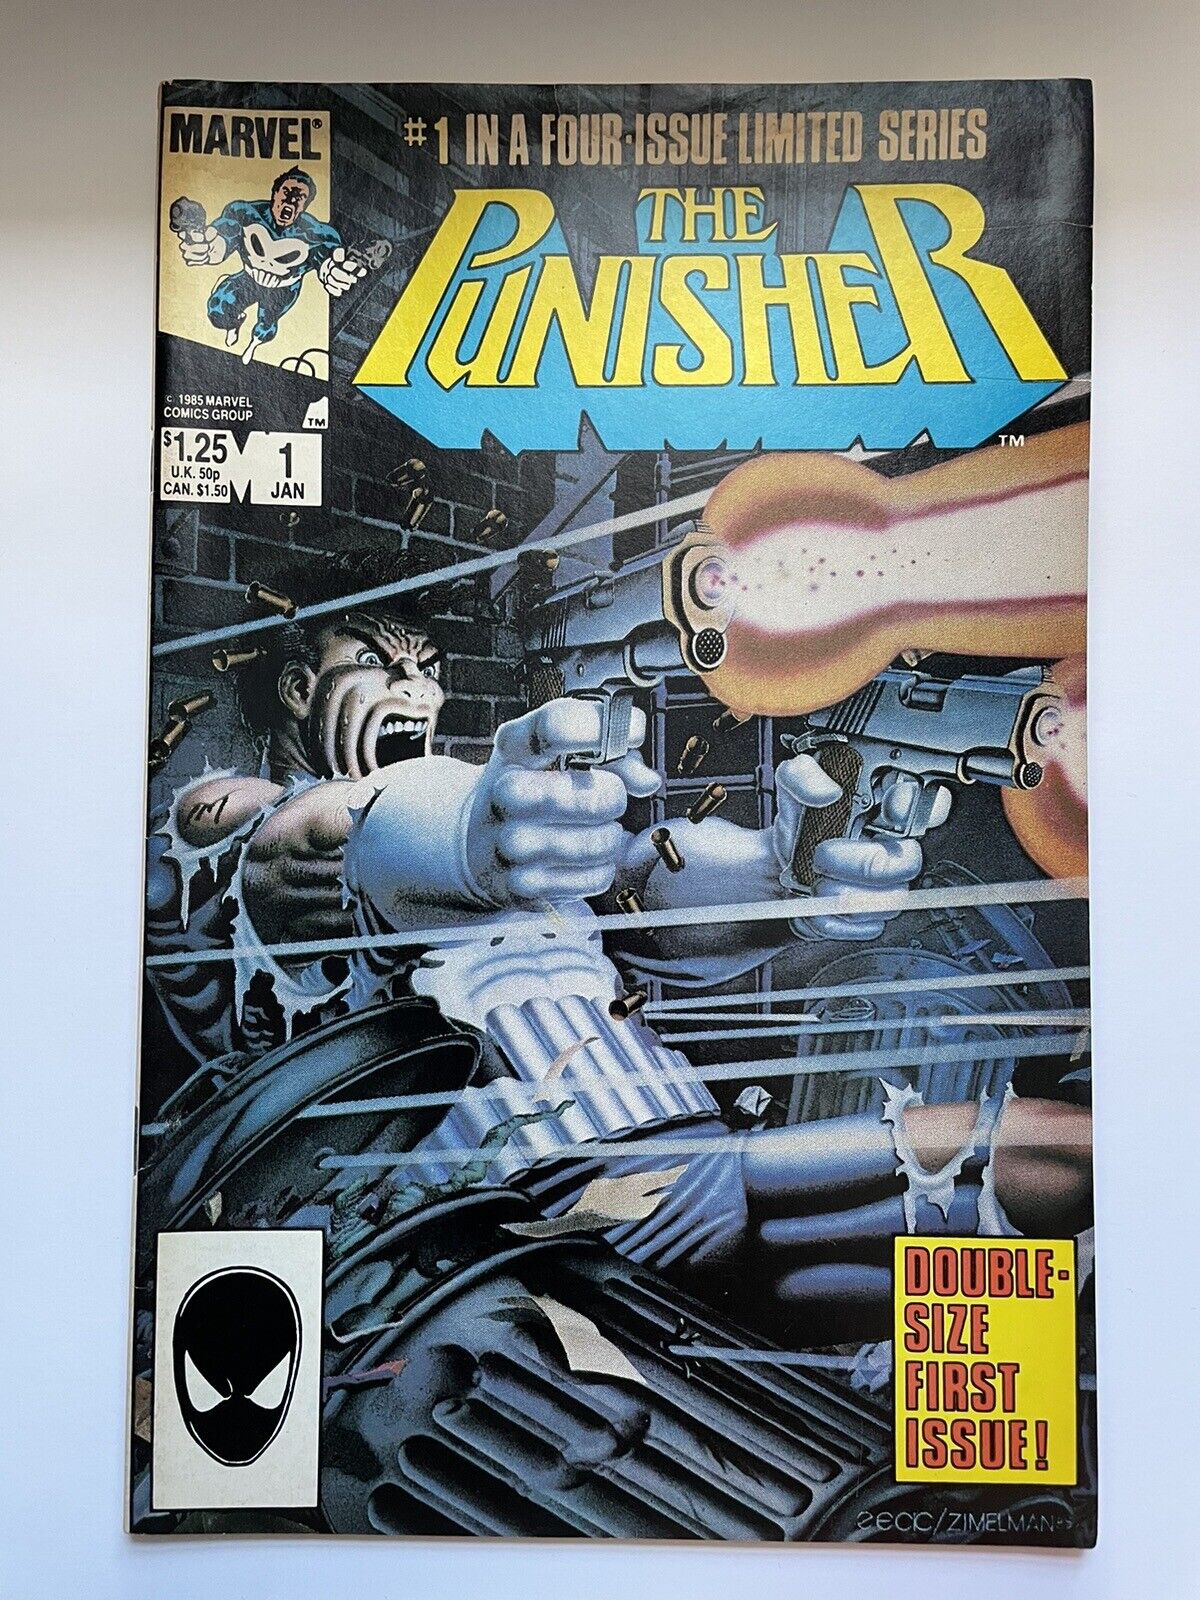 PUNISHER #1 LIMITED SERIES (Marvel Comics Jan 1986) JIGSAW appearance